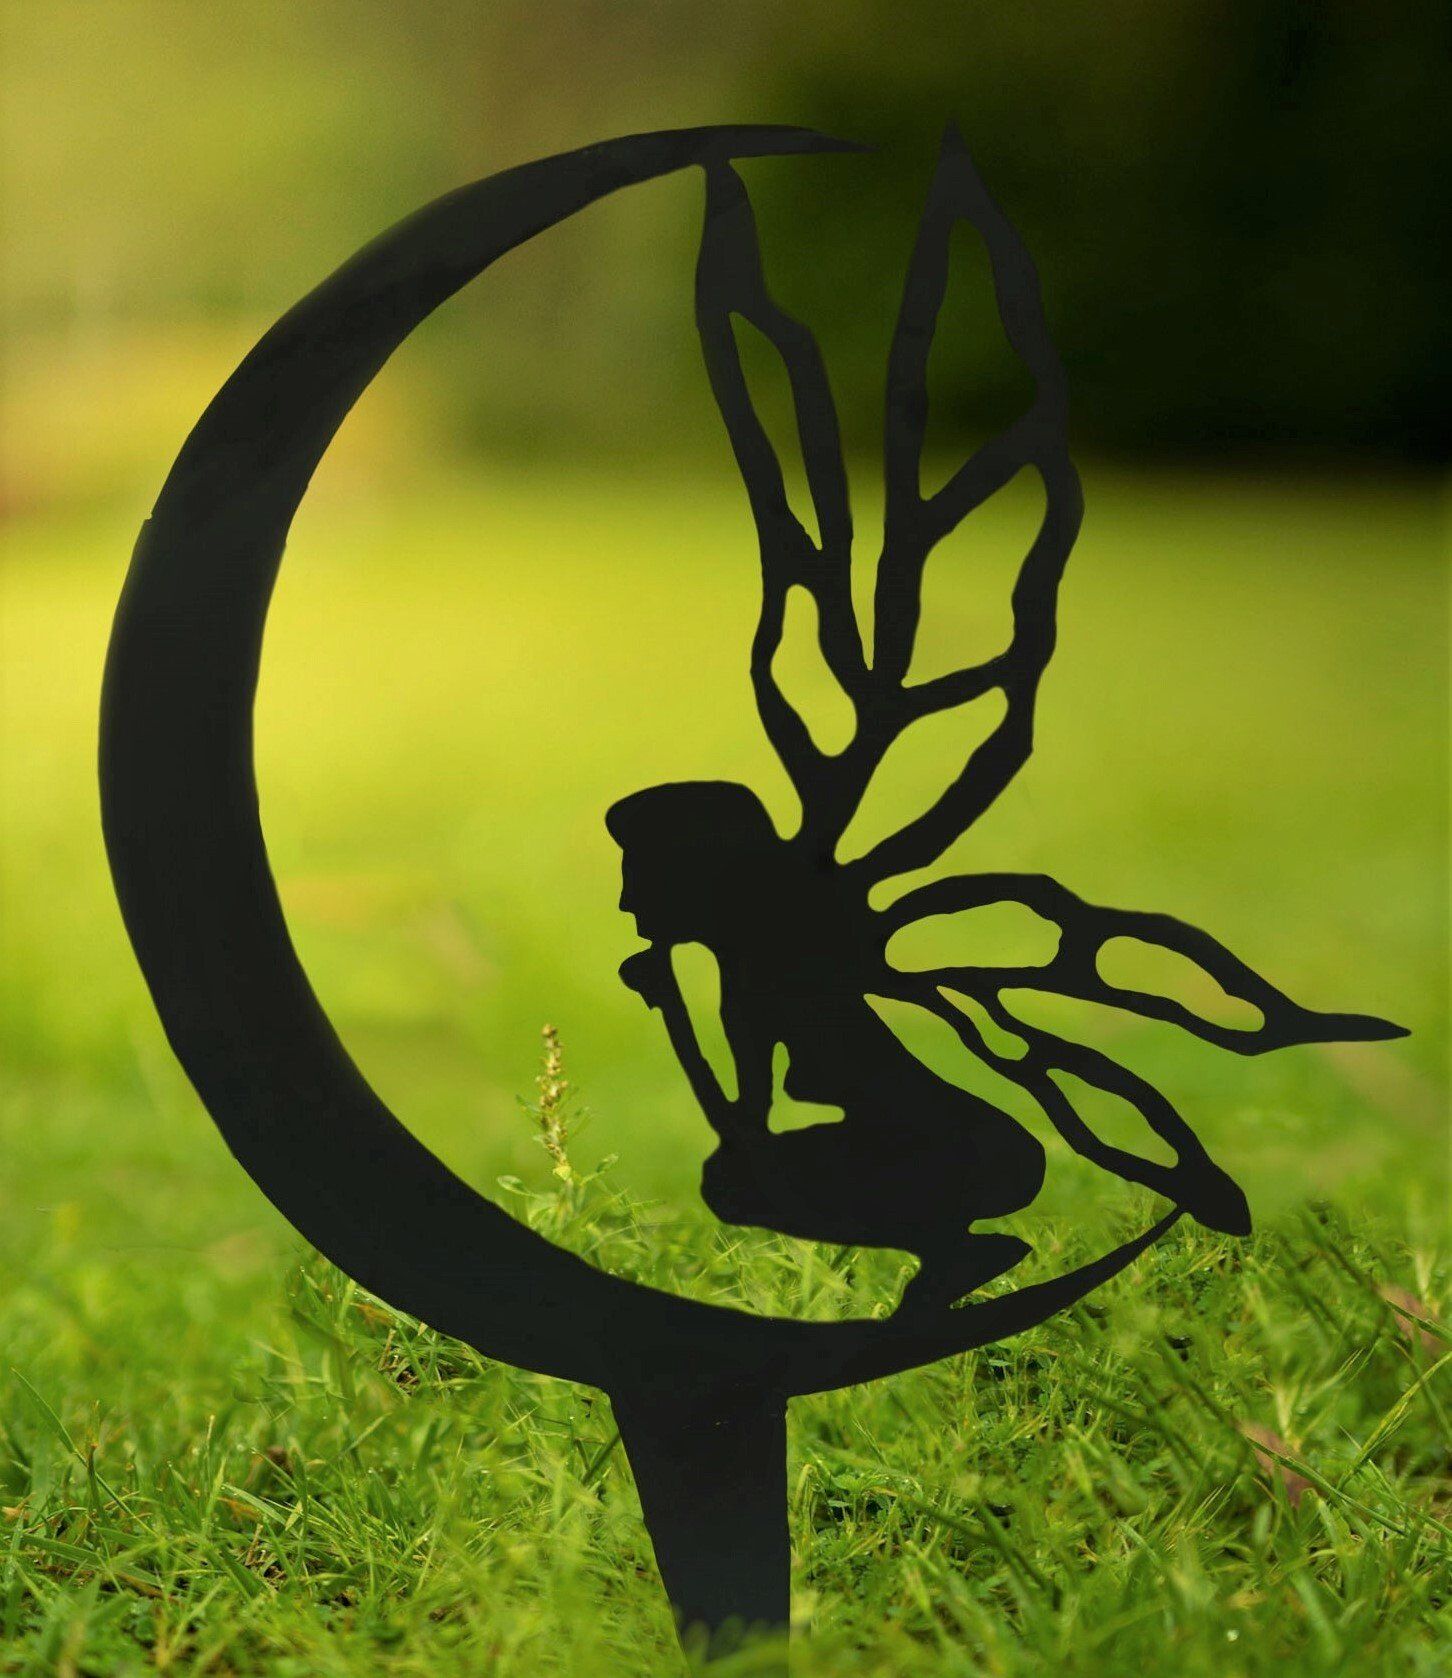 Fantasy Design Metal Silhouette Sculpture - Corten Steel Garden Art